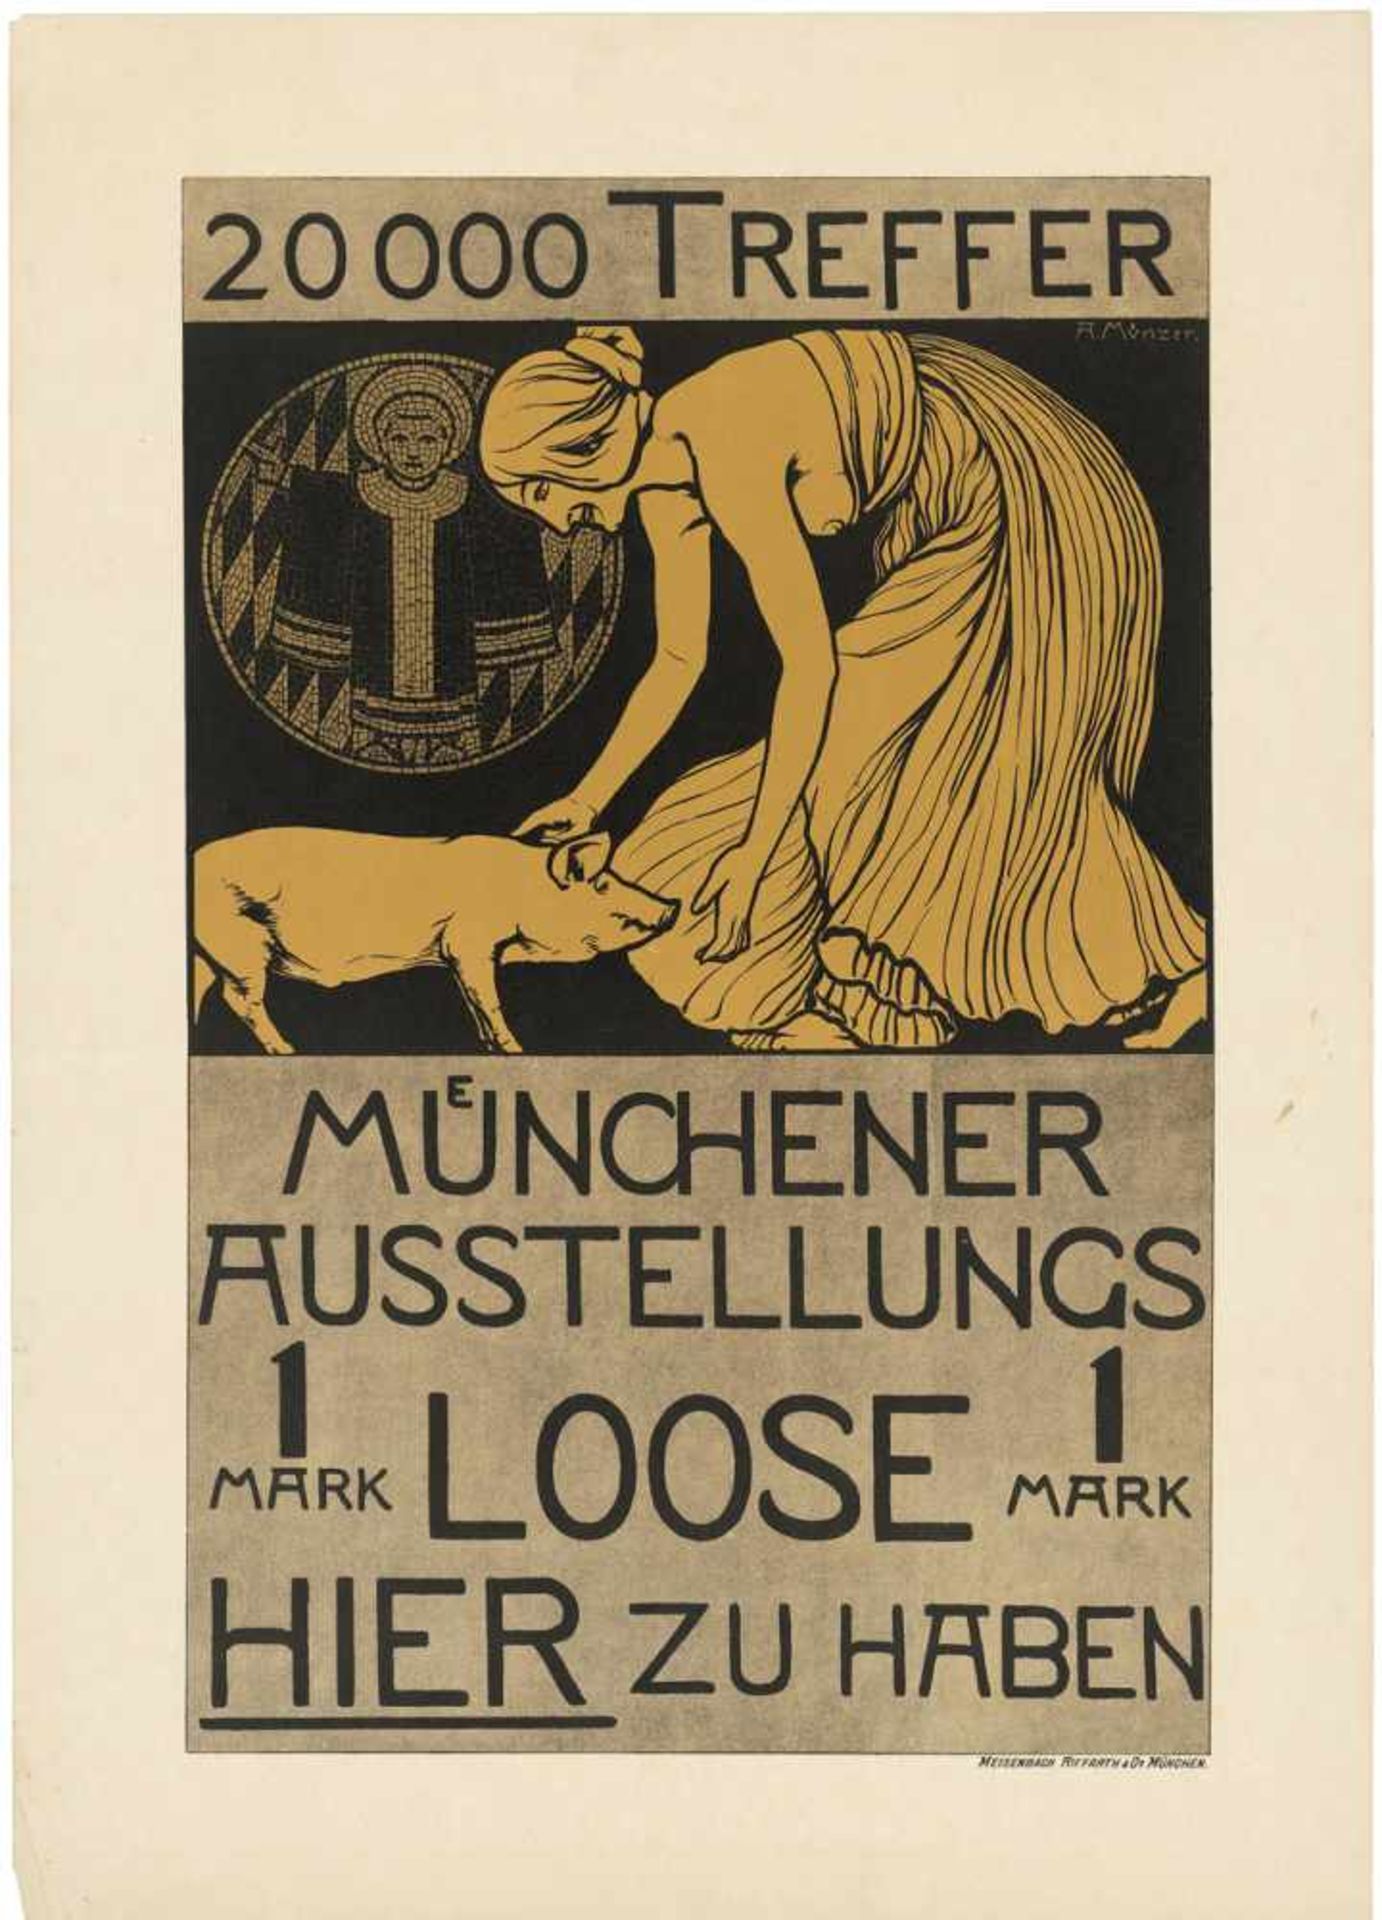 Münzer, Adolf: 20 000 Treffer Münzer, Adolf. 20 000 Treffer, Münchener Ausstellungs Loose.